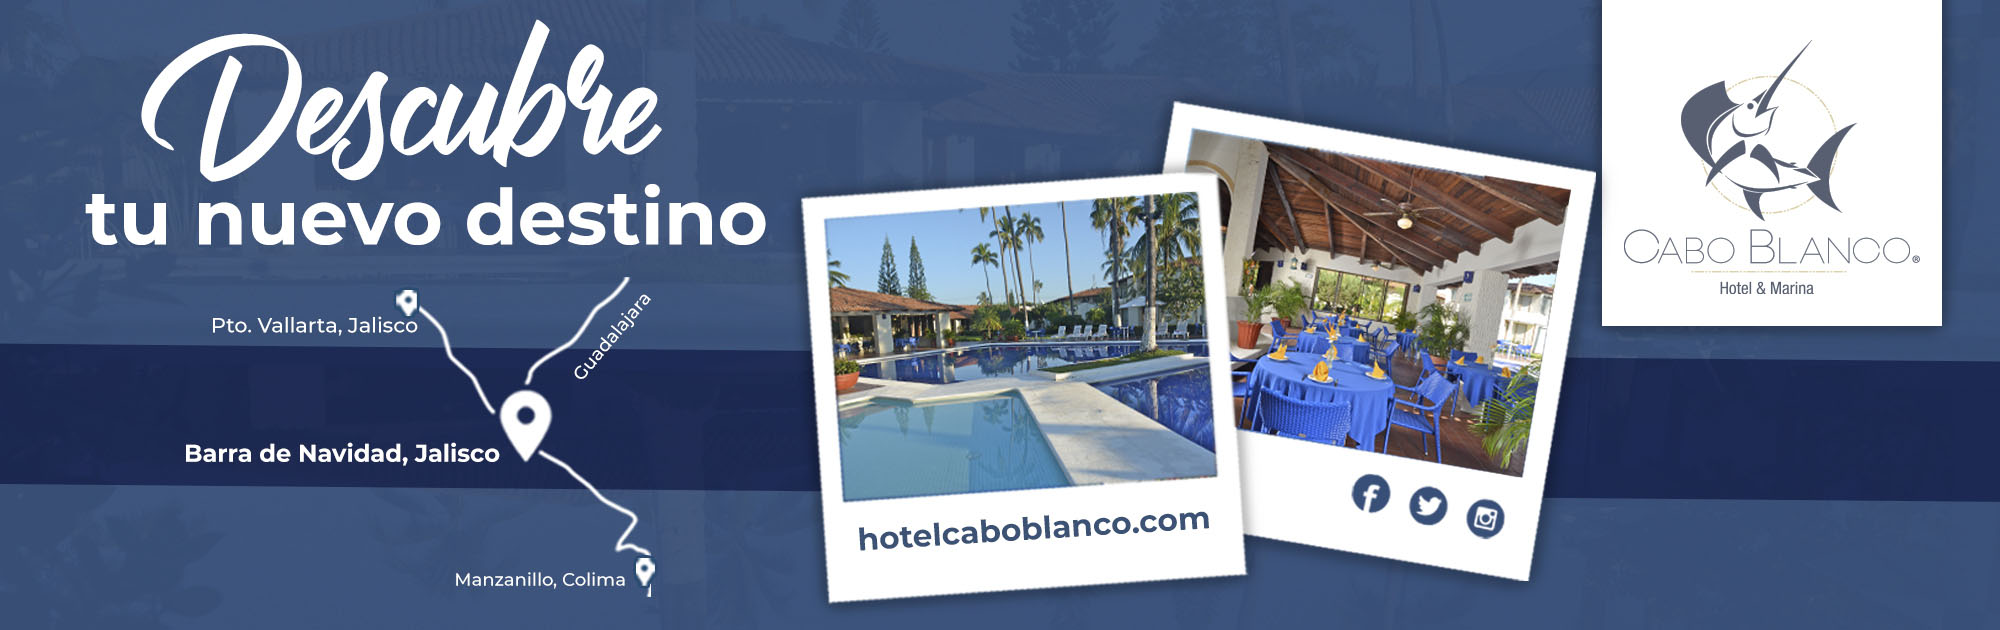 Hotel Cabo Blanco